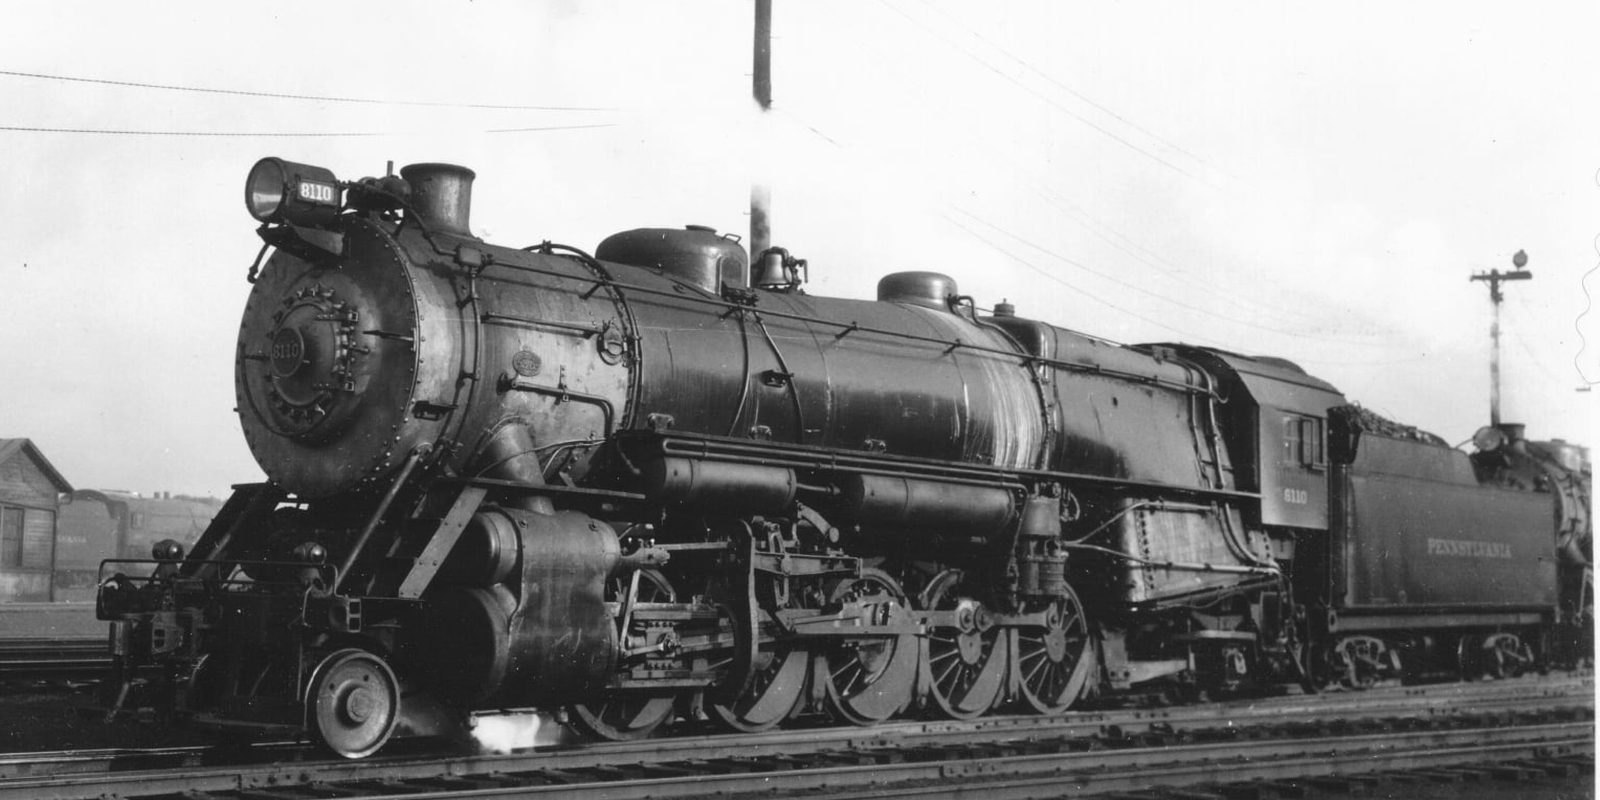 Pennsylvania Rairoad N2sa No. 8110 in 1933 in Columbus, Ohio